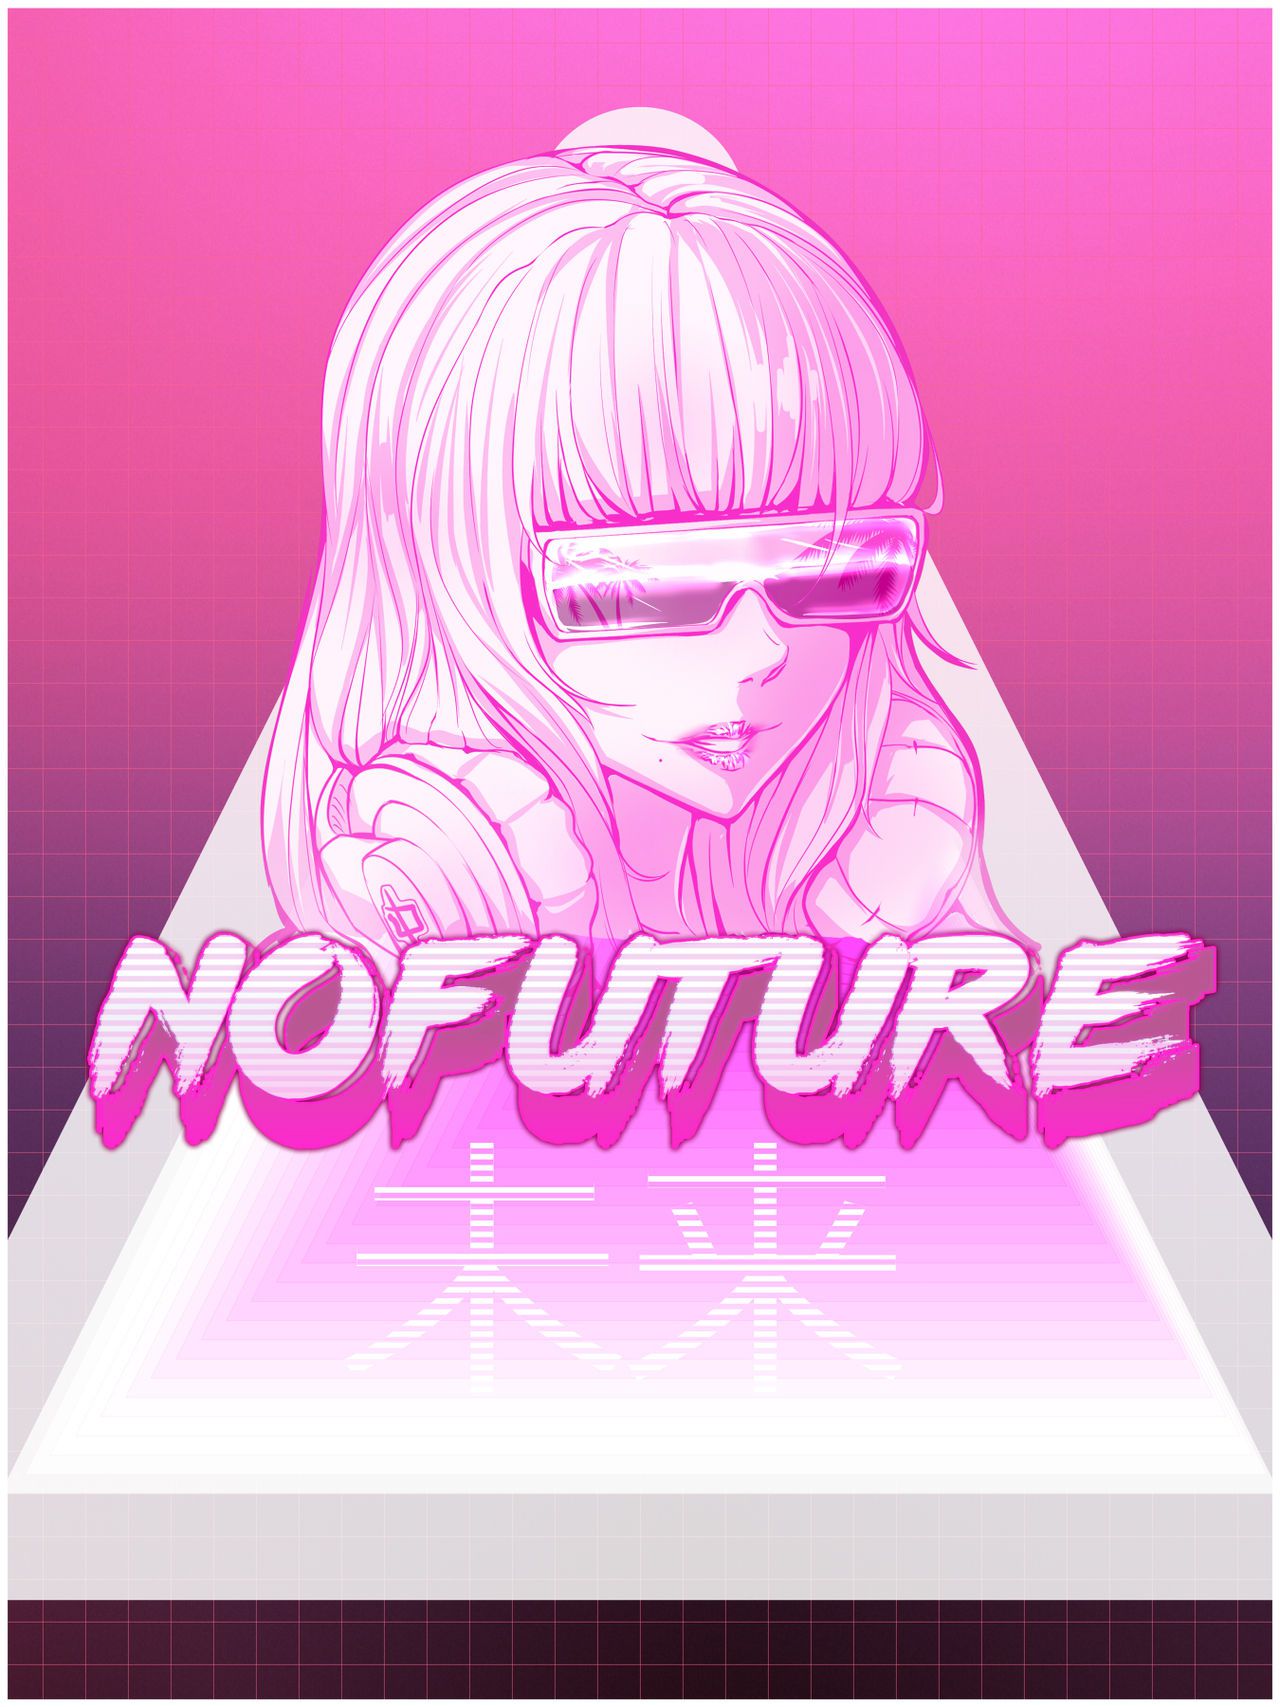 Artist - NoFuture 95